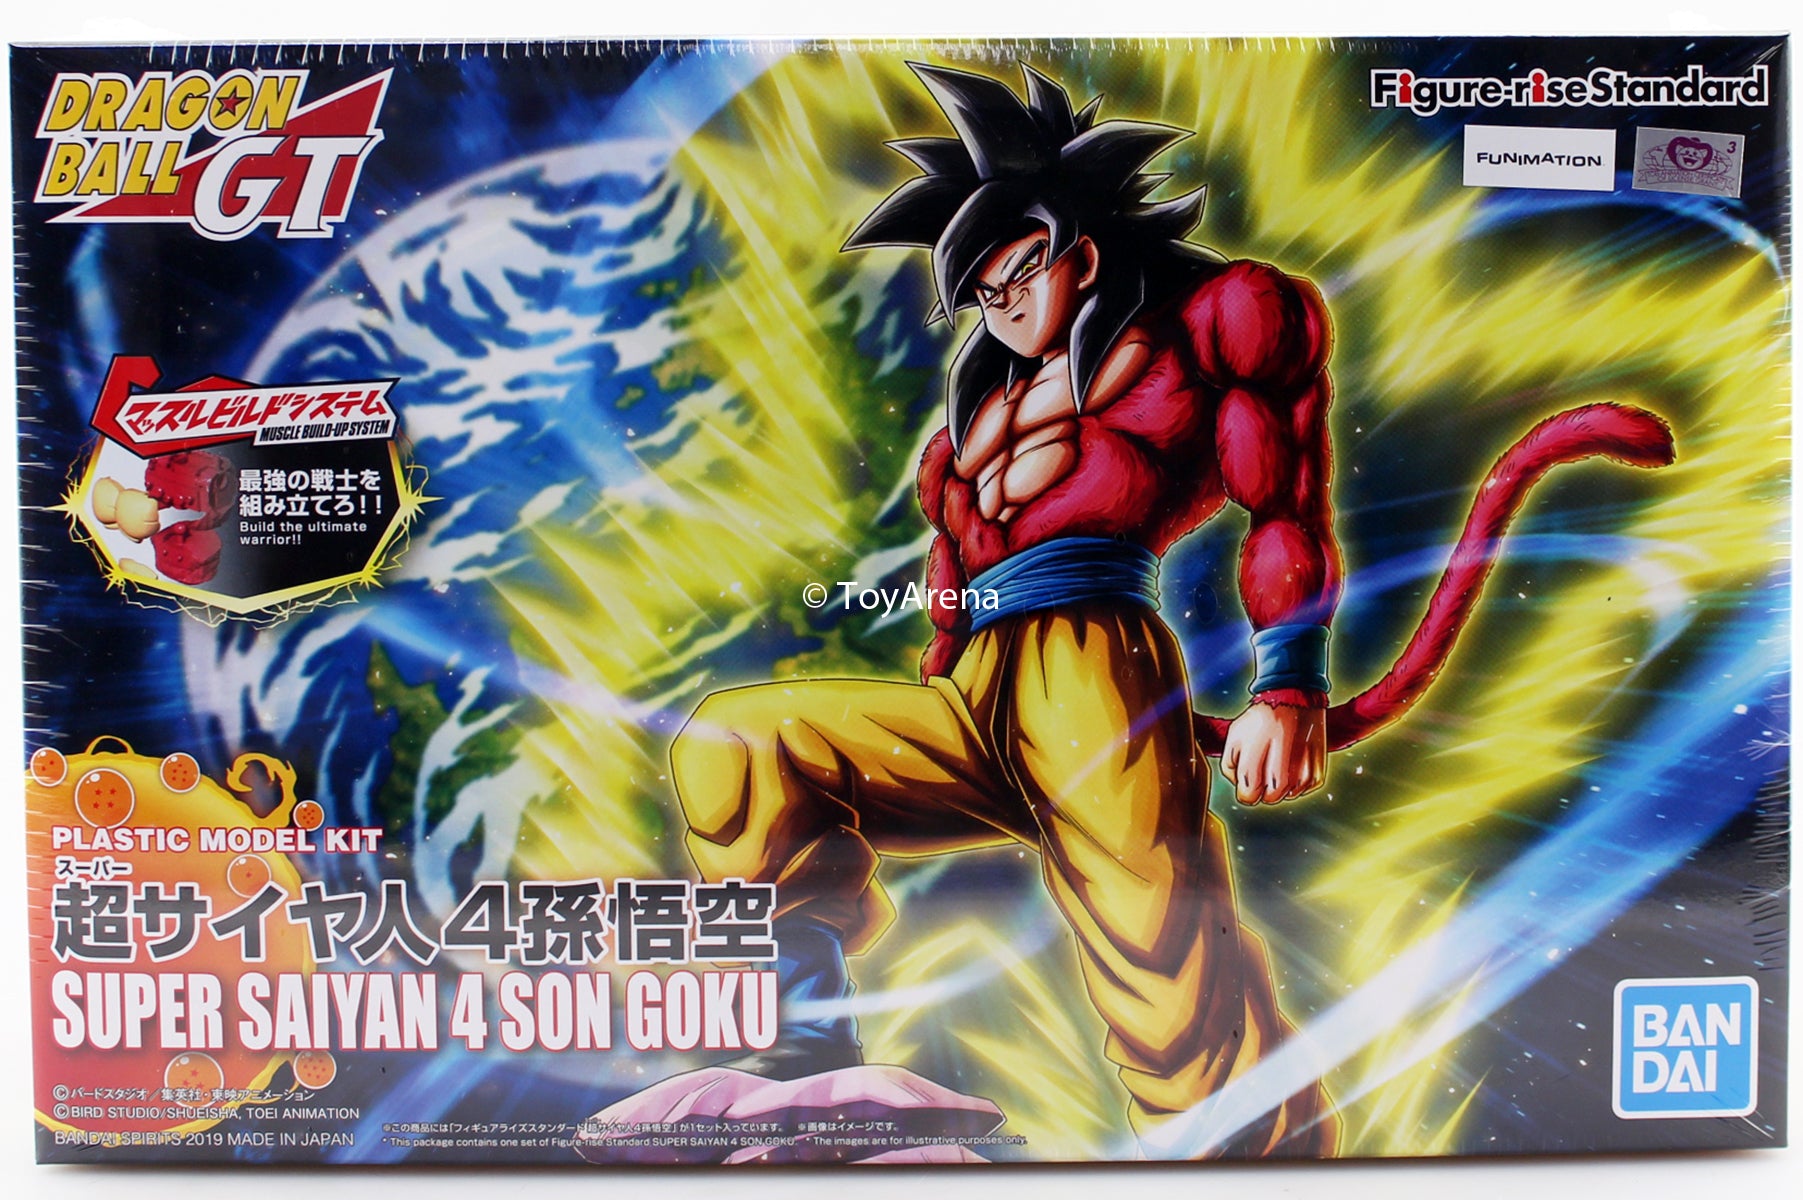 Figure-rise Standard Dragonball Super Saiyan 4 Son Goku [New Packaging] Plastic Model Kit